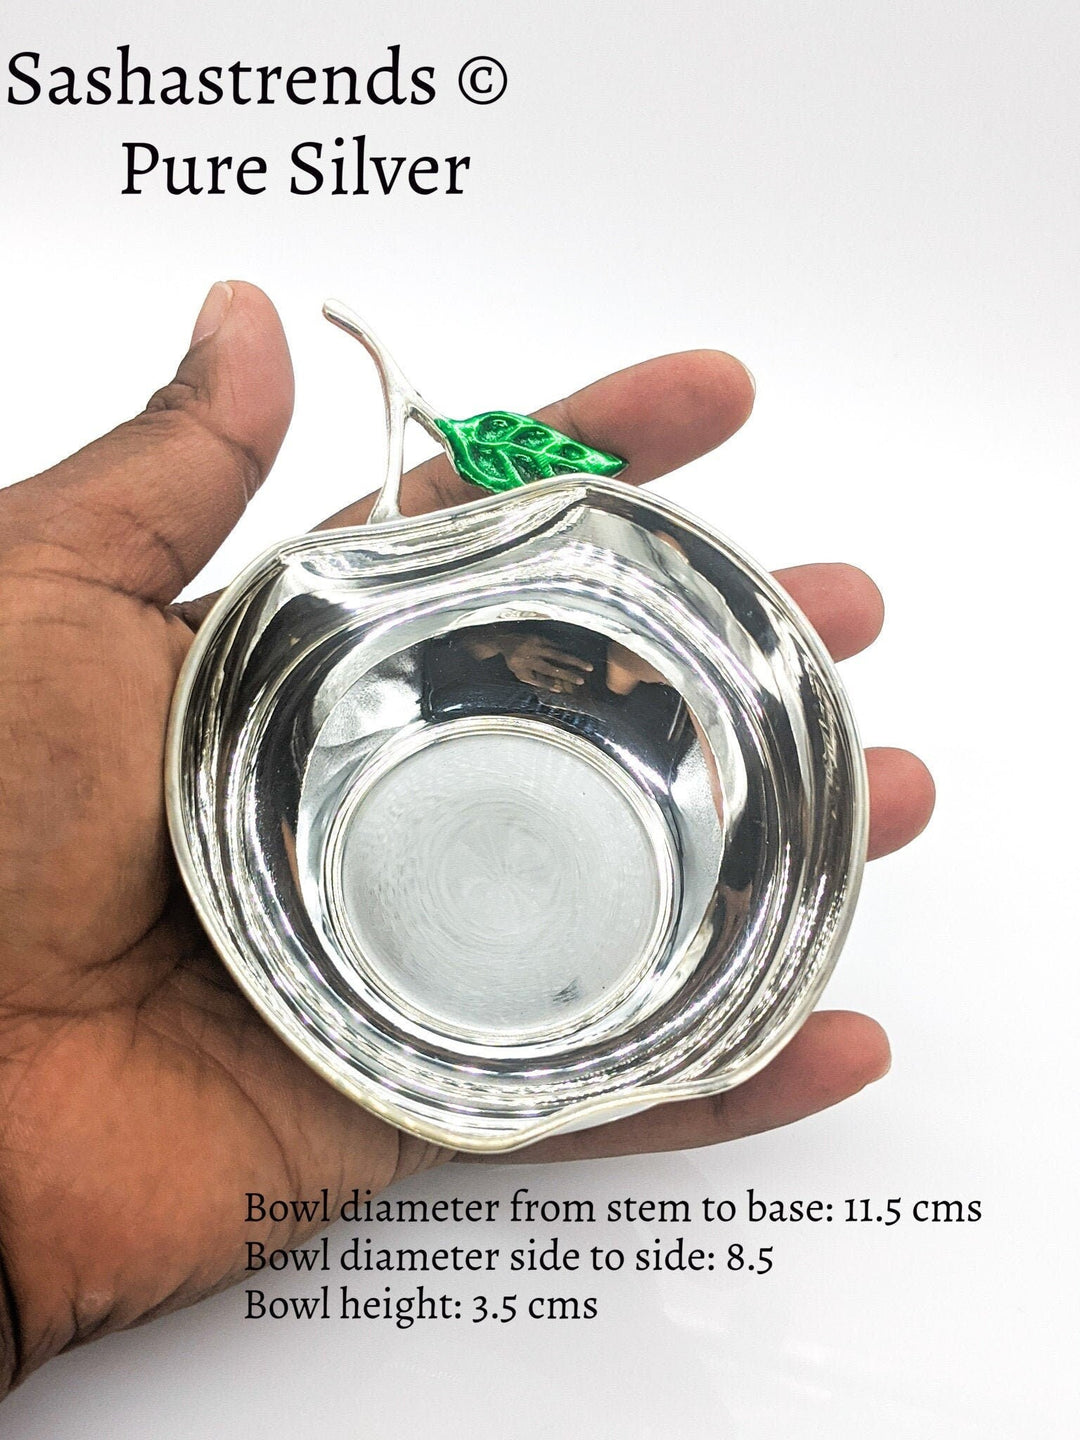 Pure silver sturdy apple shaped bowl 8.5cm diameter- silver babies feeding bowl-silver gift items for birthday, gifts wedding & housewarming